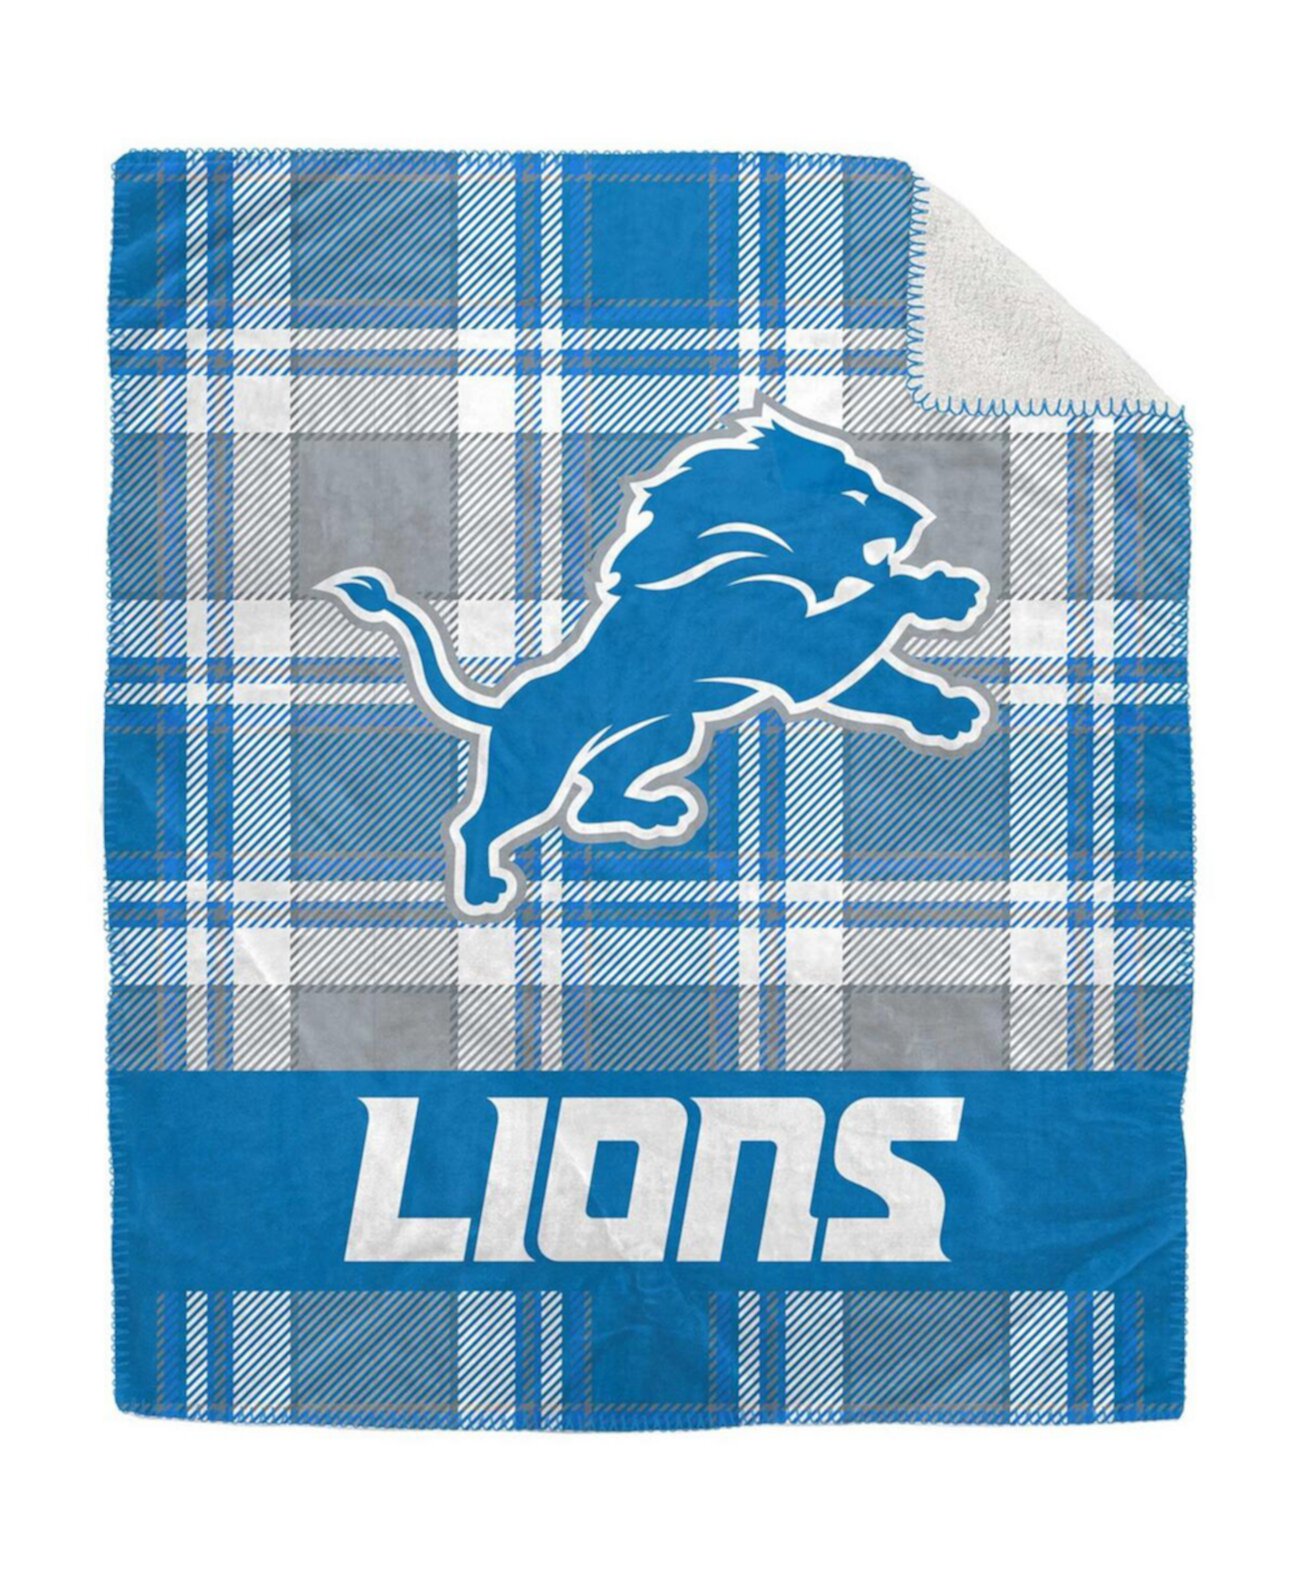 Плюшевое фланелевое одеяло Detroit Lions размером 50 x 60 дюймов в клетку Pegasus Home Fashions